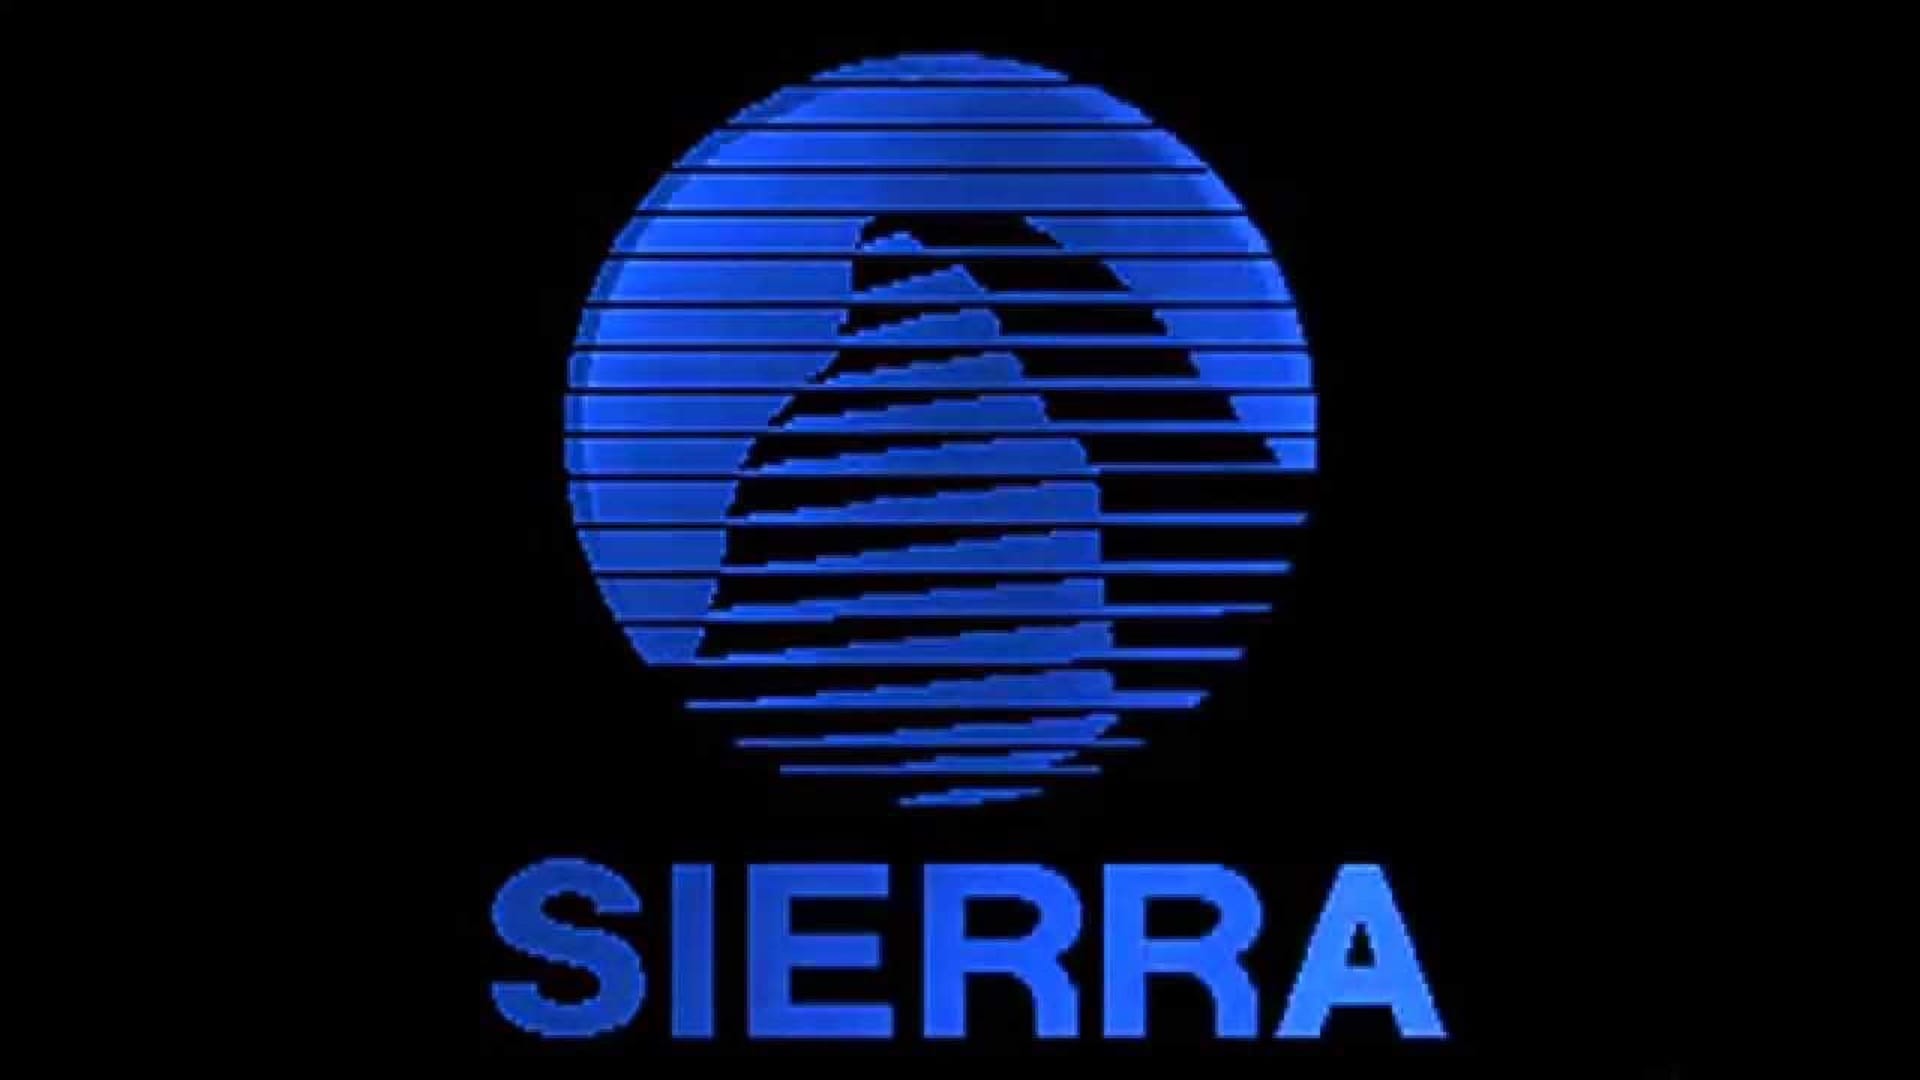 Sierra On-Line